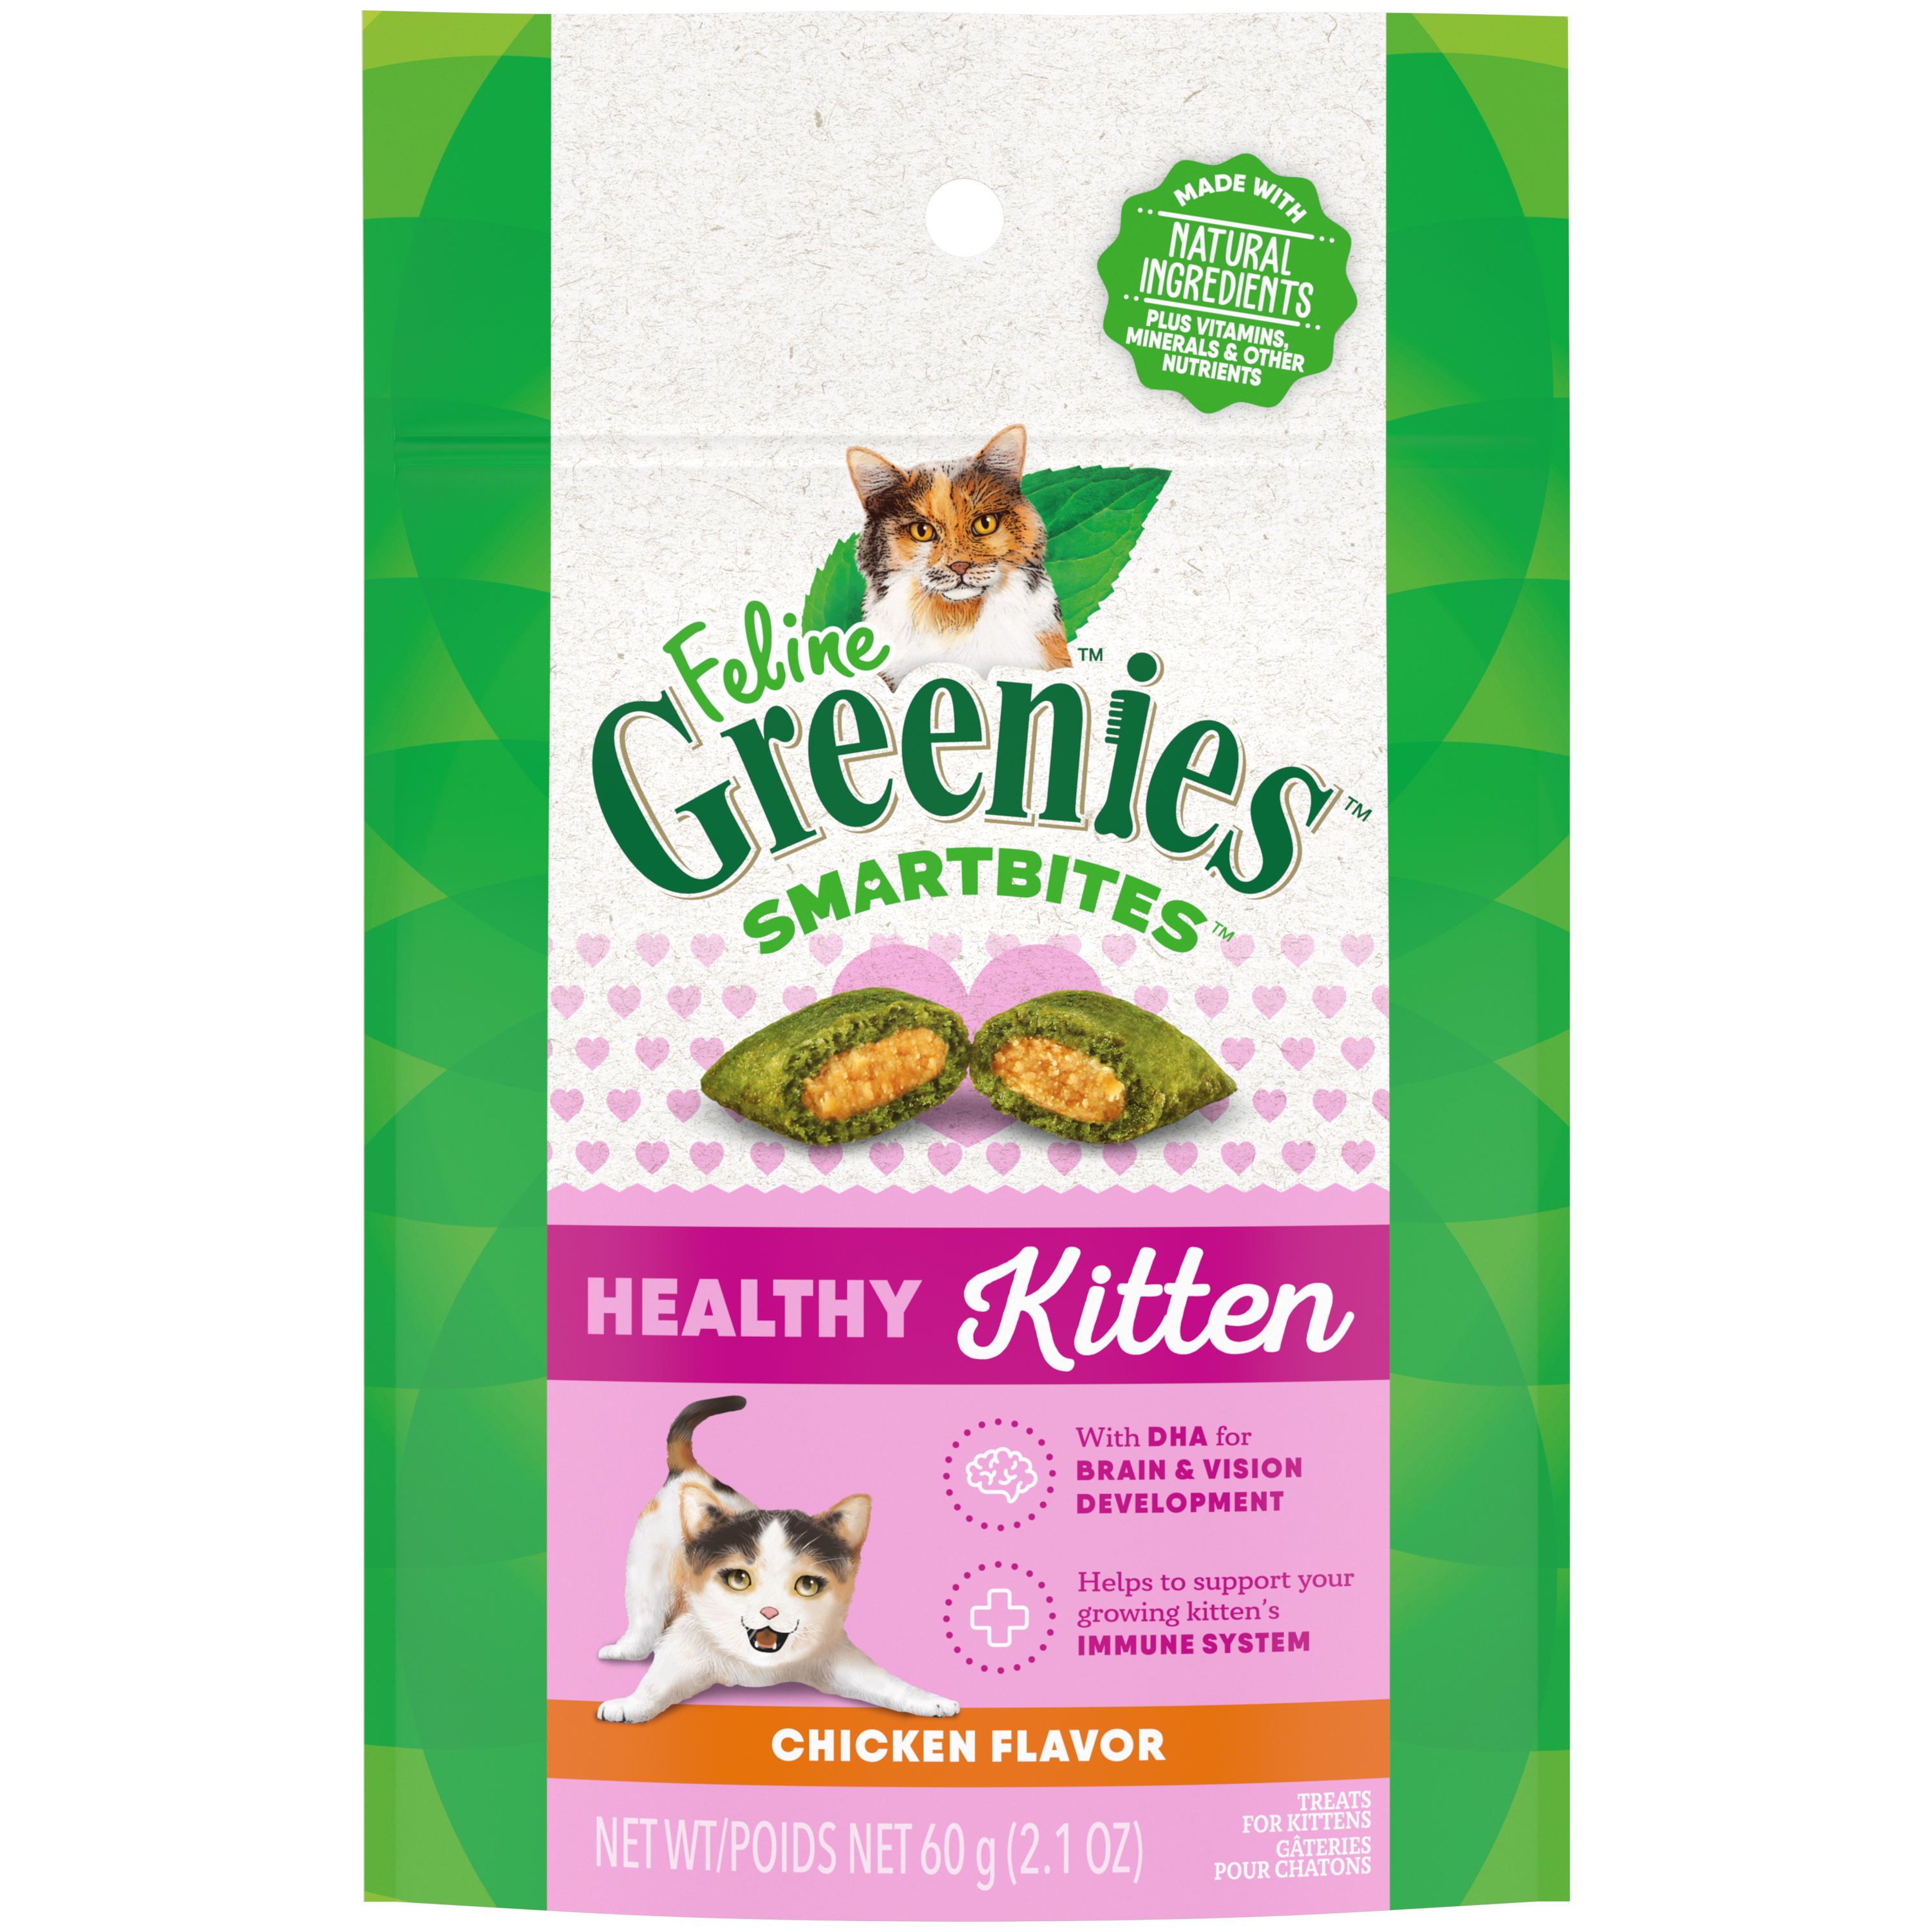 2.1oz Greenies Feline SmartBites Kitten - Health/First Aid